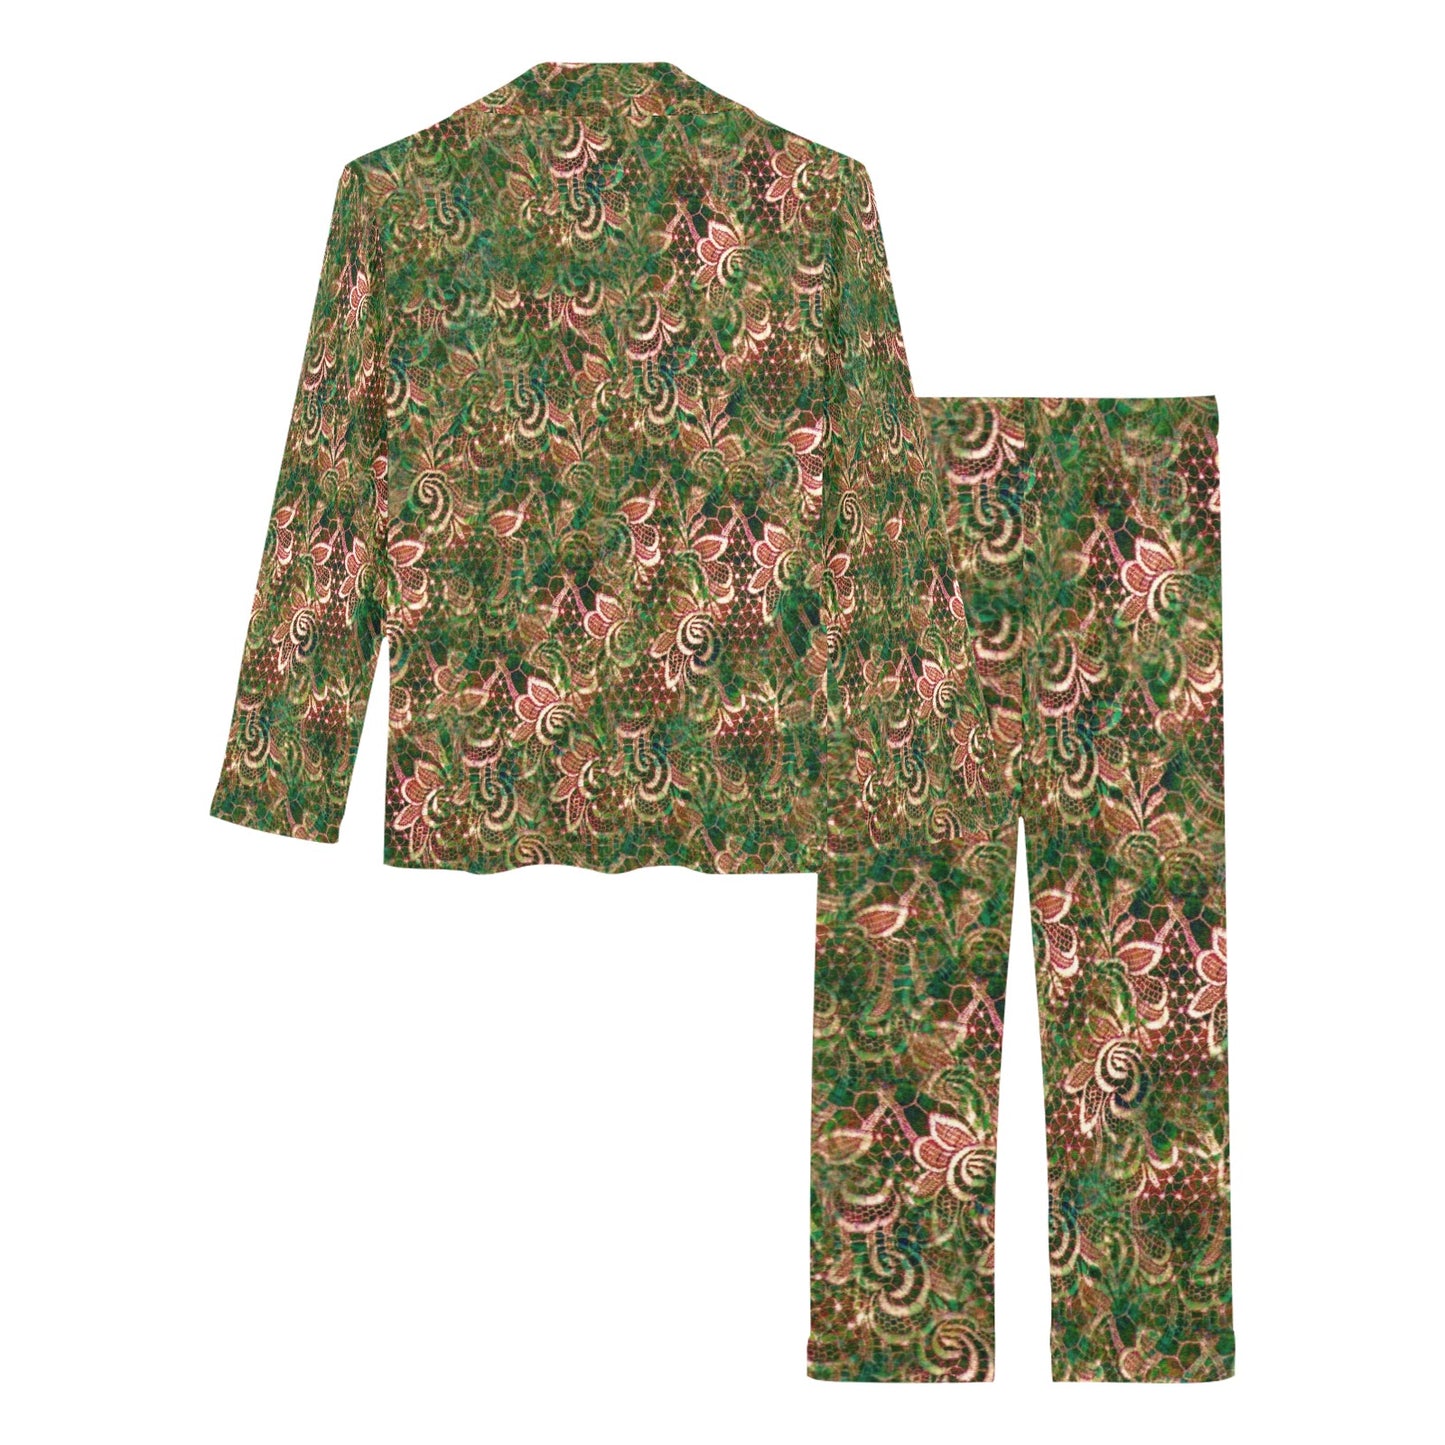 Victorian printed lace pajama set, design 34 Women's Long Pajama Set (Sets 02)